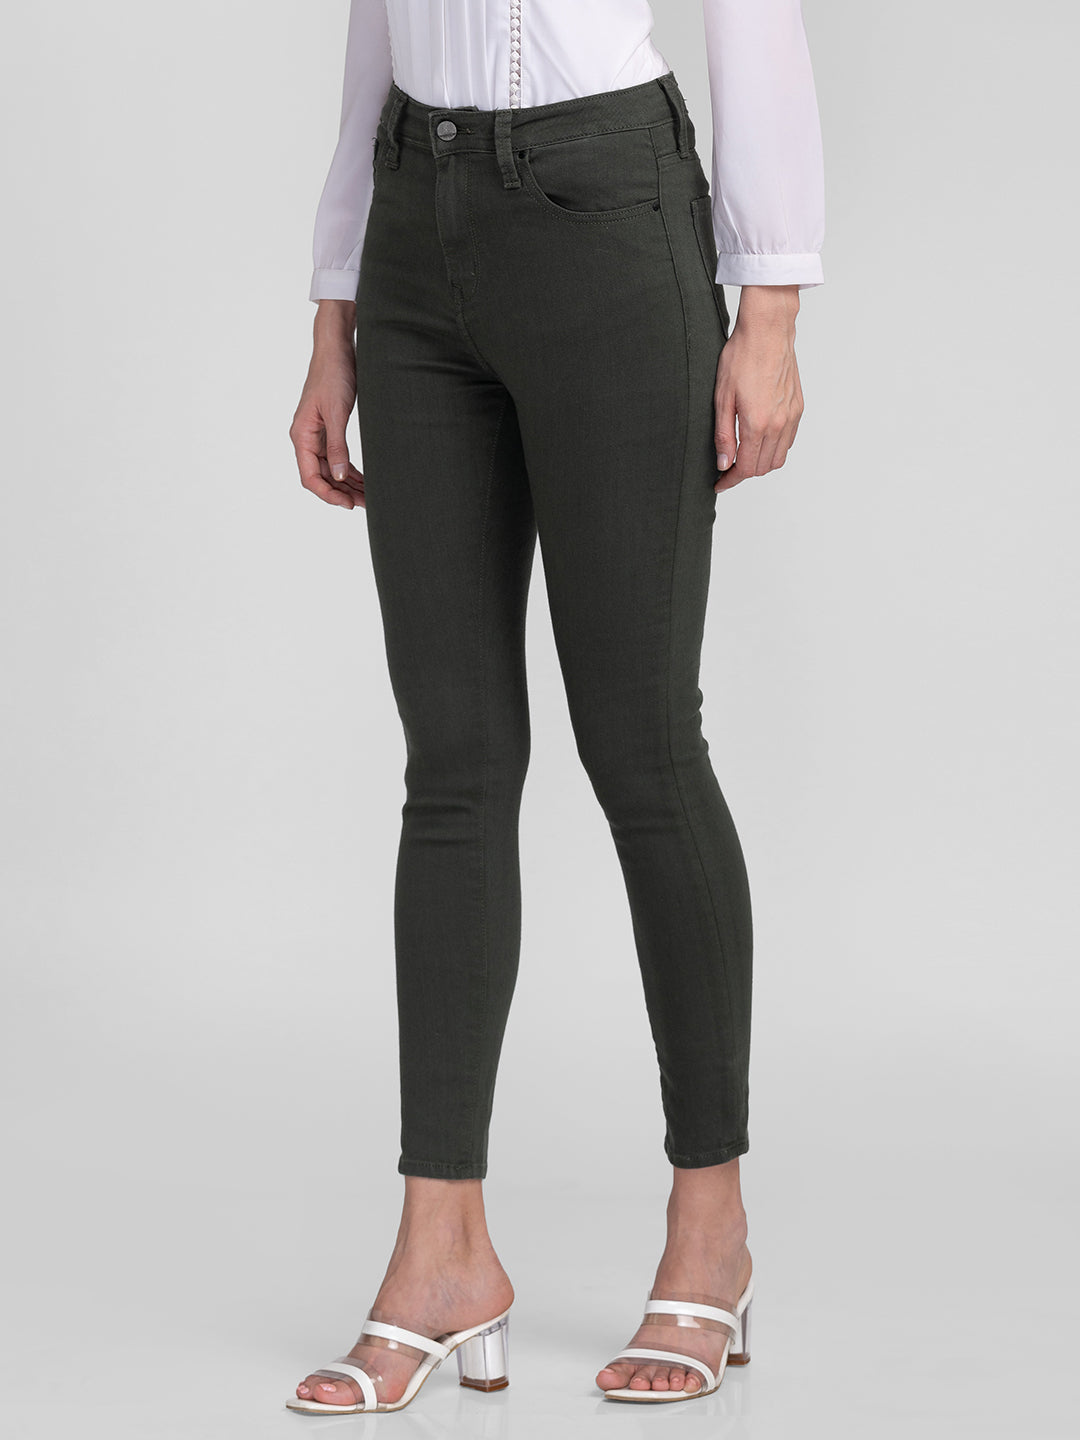 Spykar Women Dark Olive Cotton Super Skinny Ankle Length Jeans (Alexa)